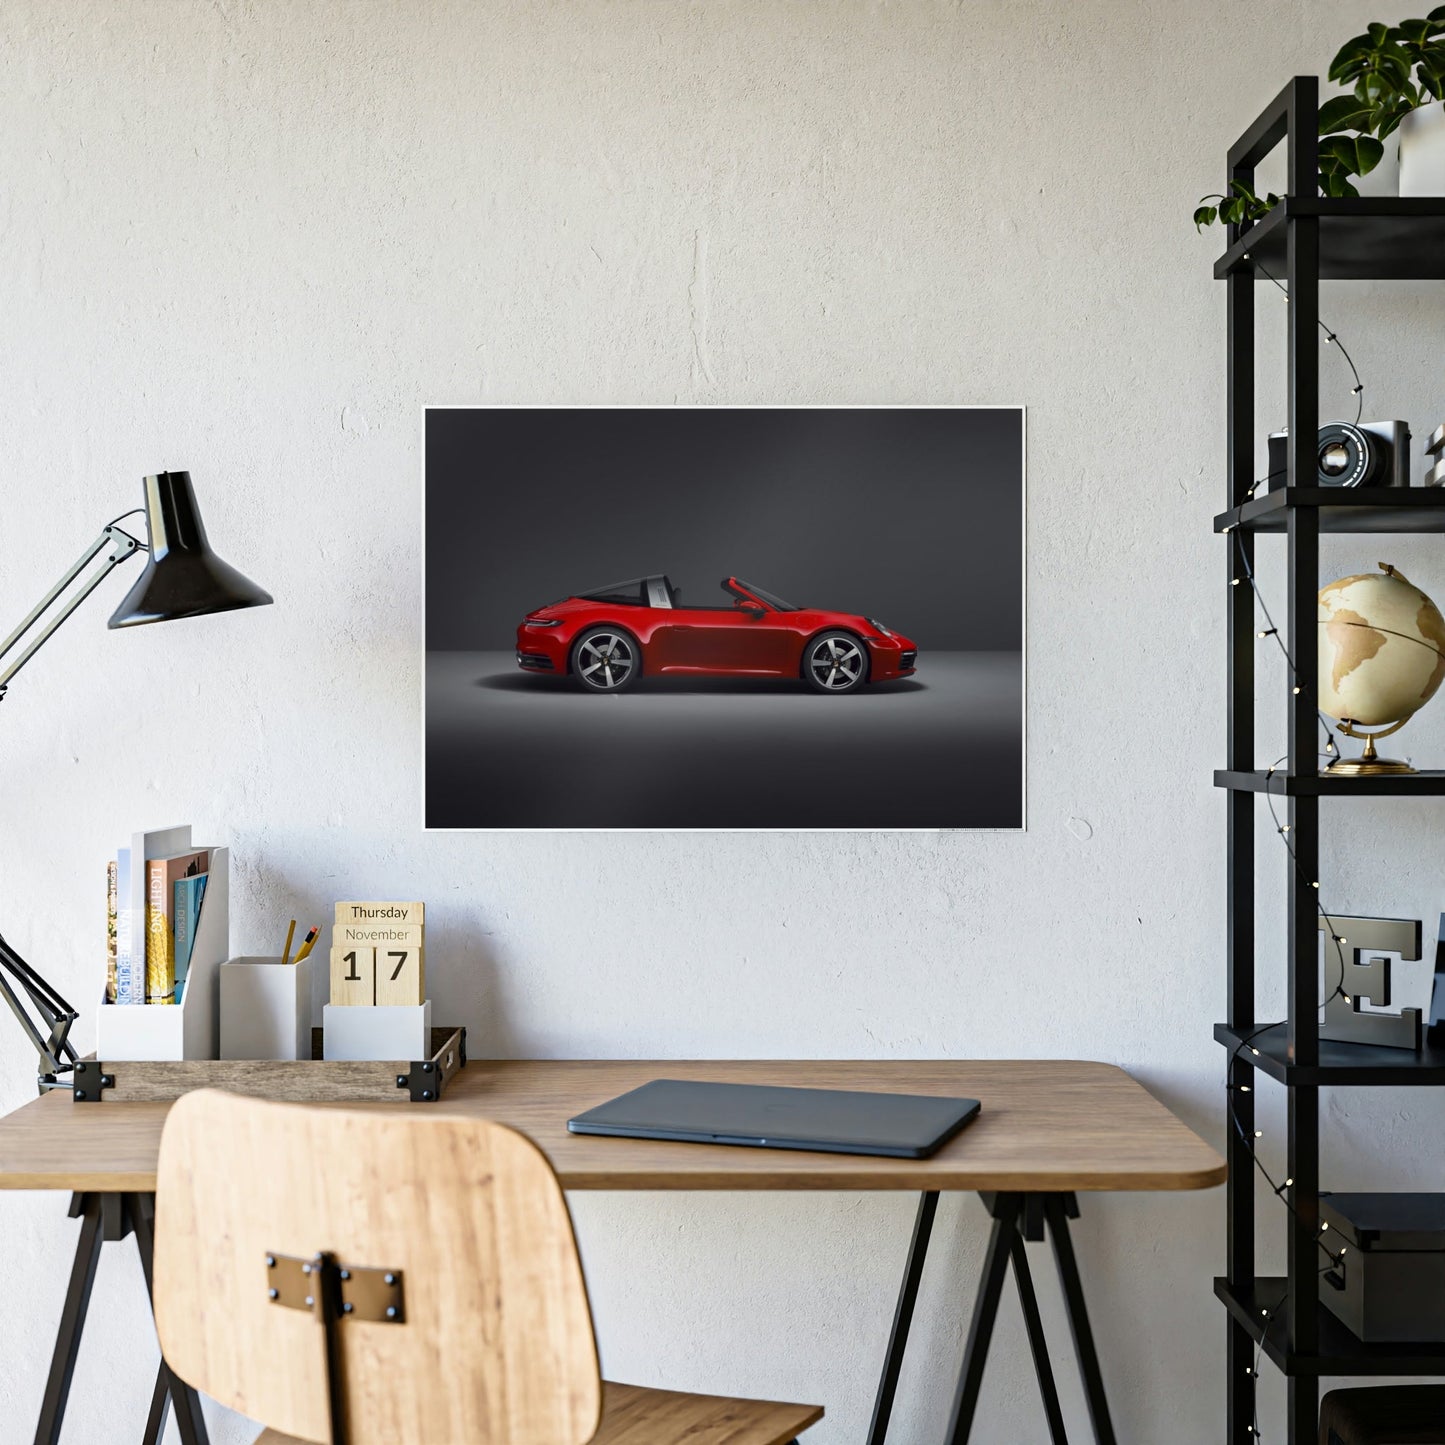 Ravishing Red: Canvas Wall Art Print of a Sleek and Stylish Red Porsche